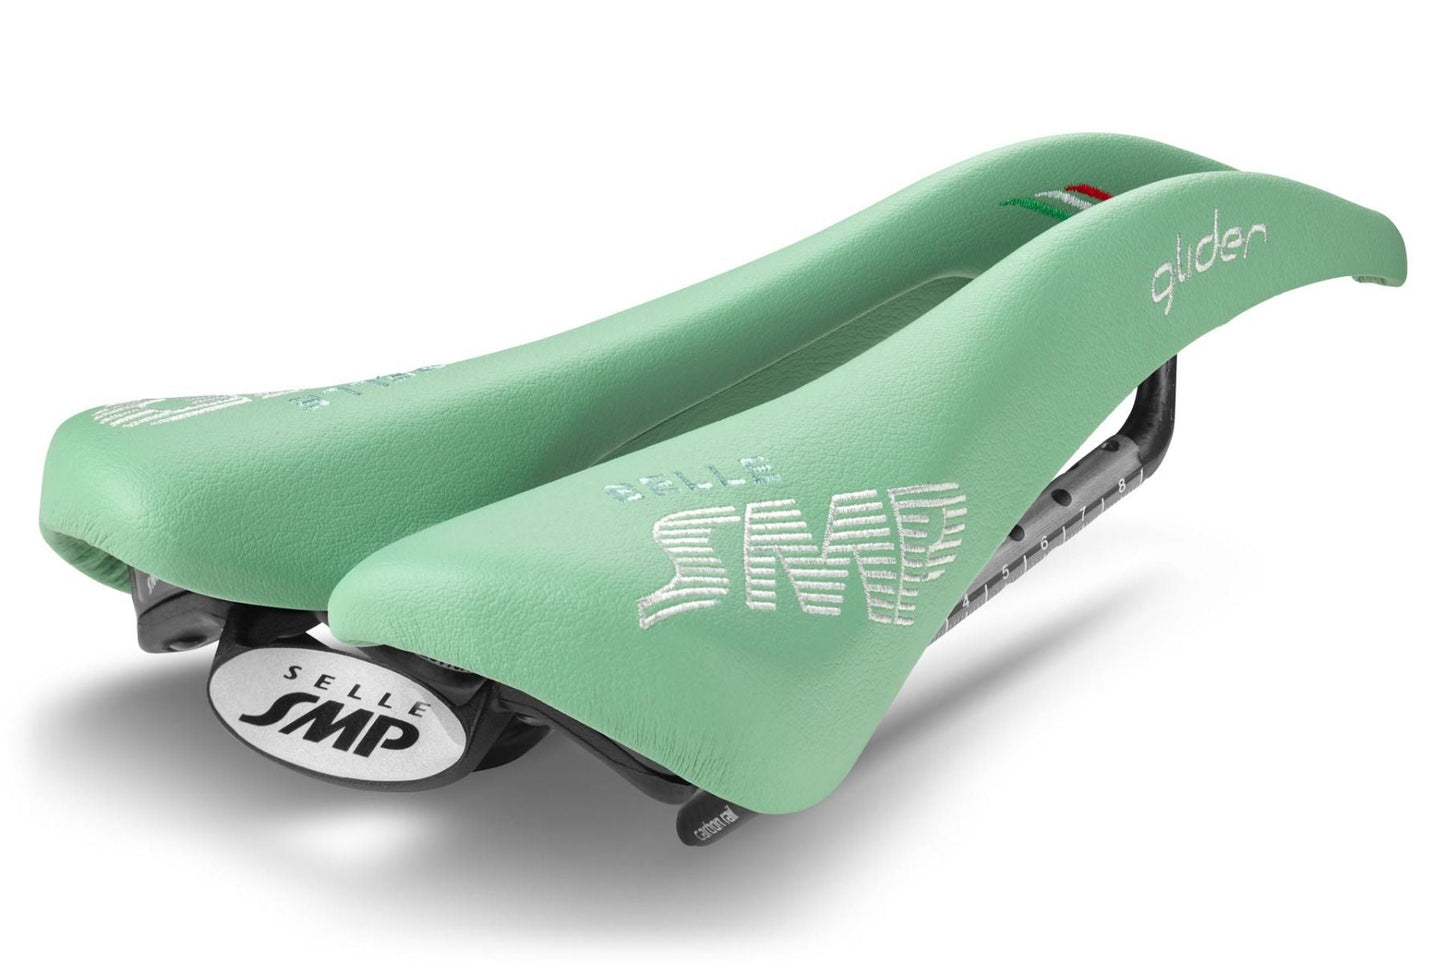 Selle SMP Glider Pro Saddle with Carbon Rails, Celeste